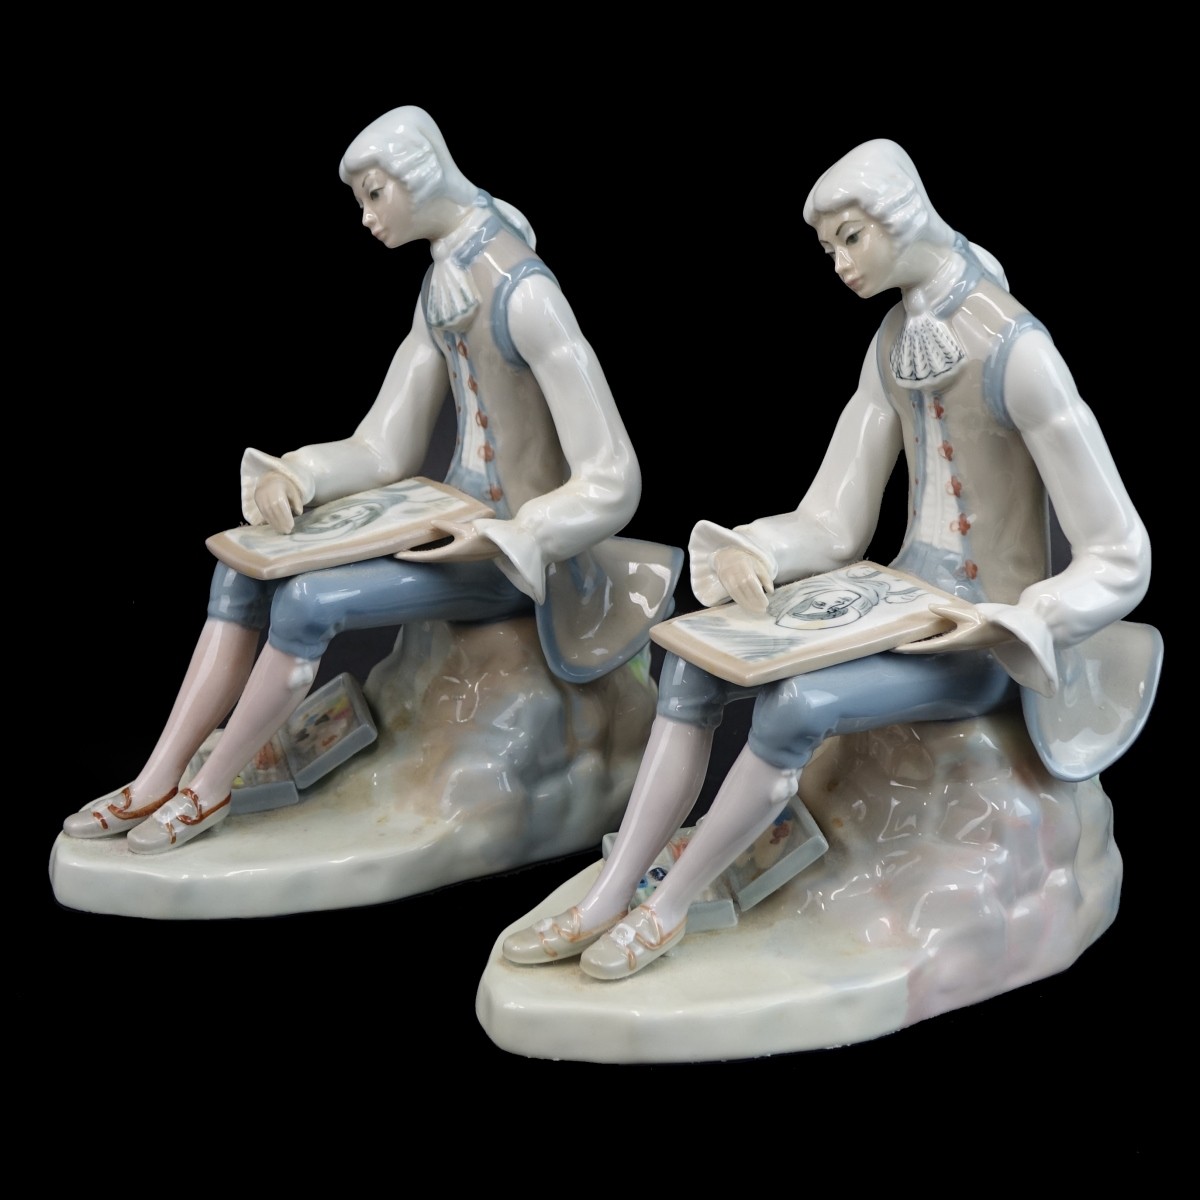 Pair of Casades Porcelain Figurines